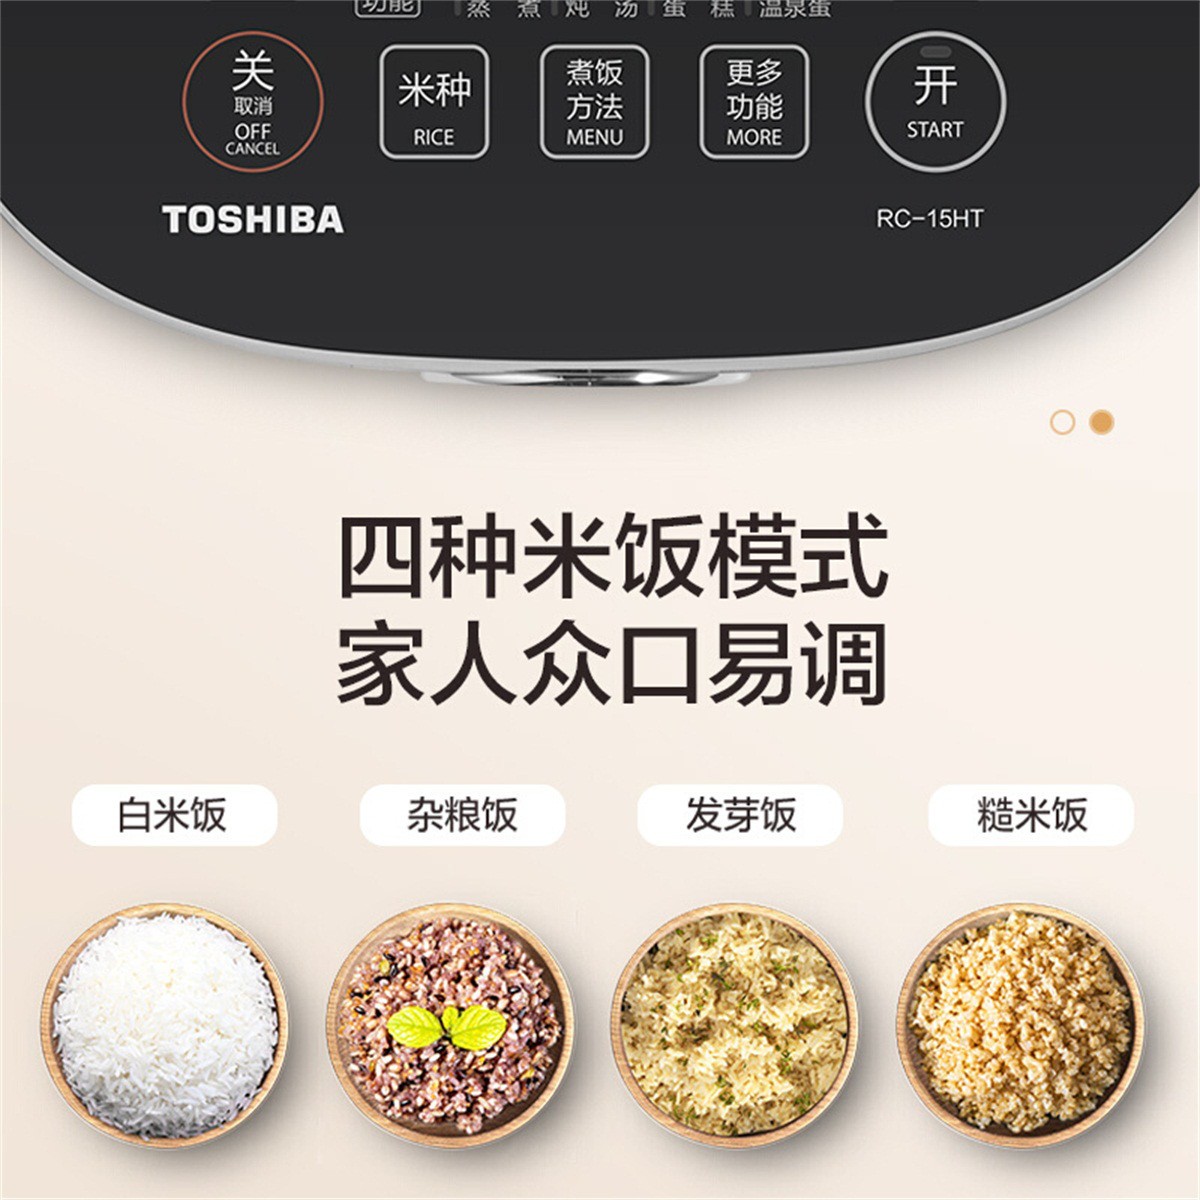 Toshiba/东芝 RC-15HT 日本电饭煲智能立体电磁加热备长碳厚釜胆 - 图1